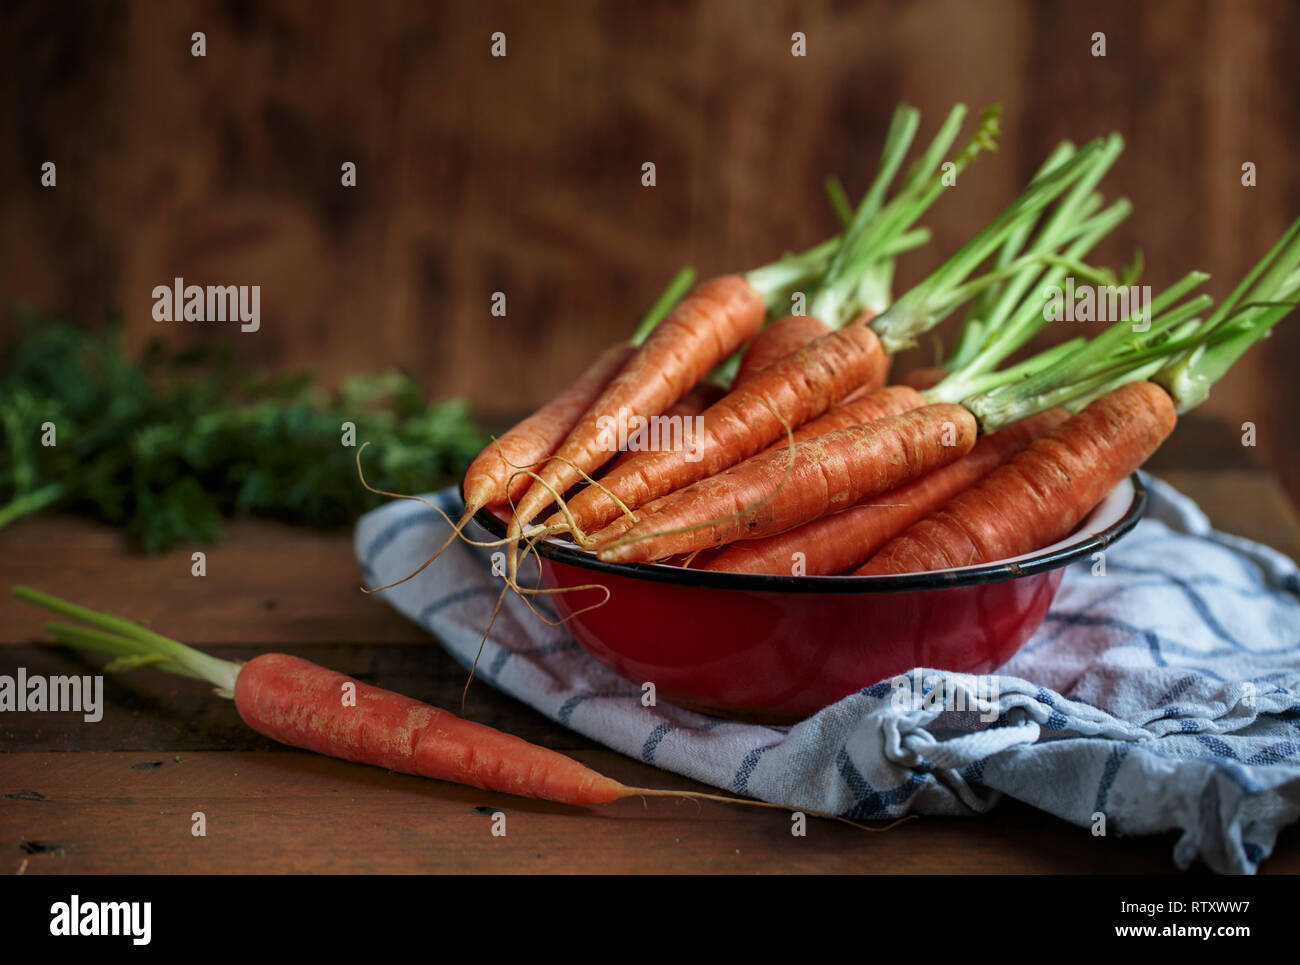 Studio Still Life with fresh Carrots Stock Photo